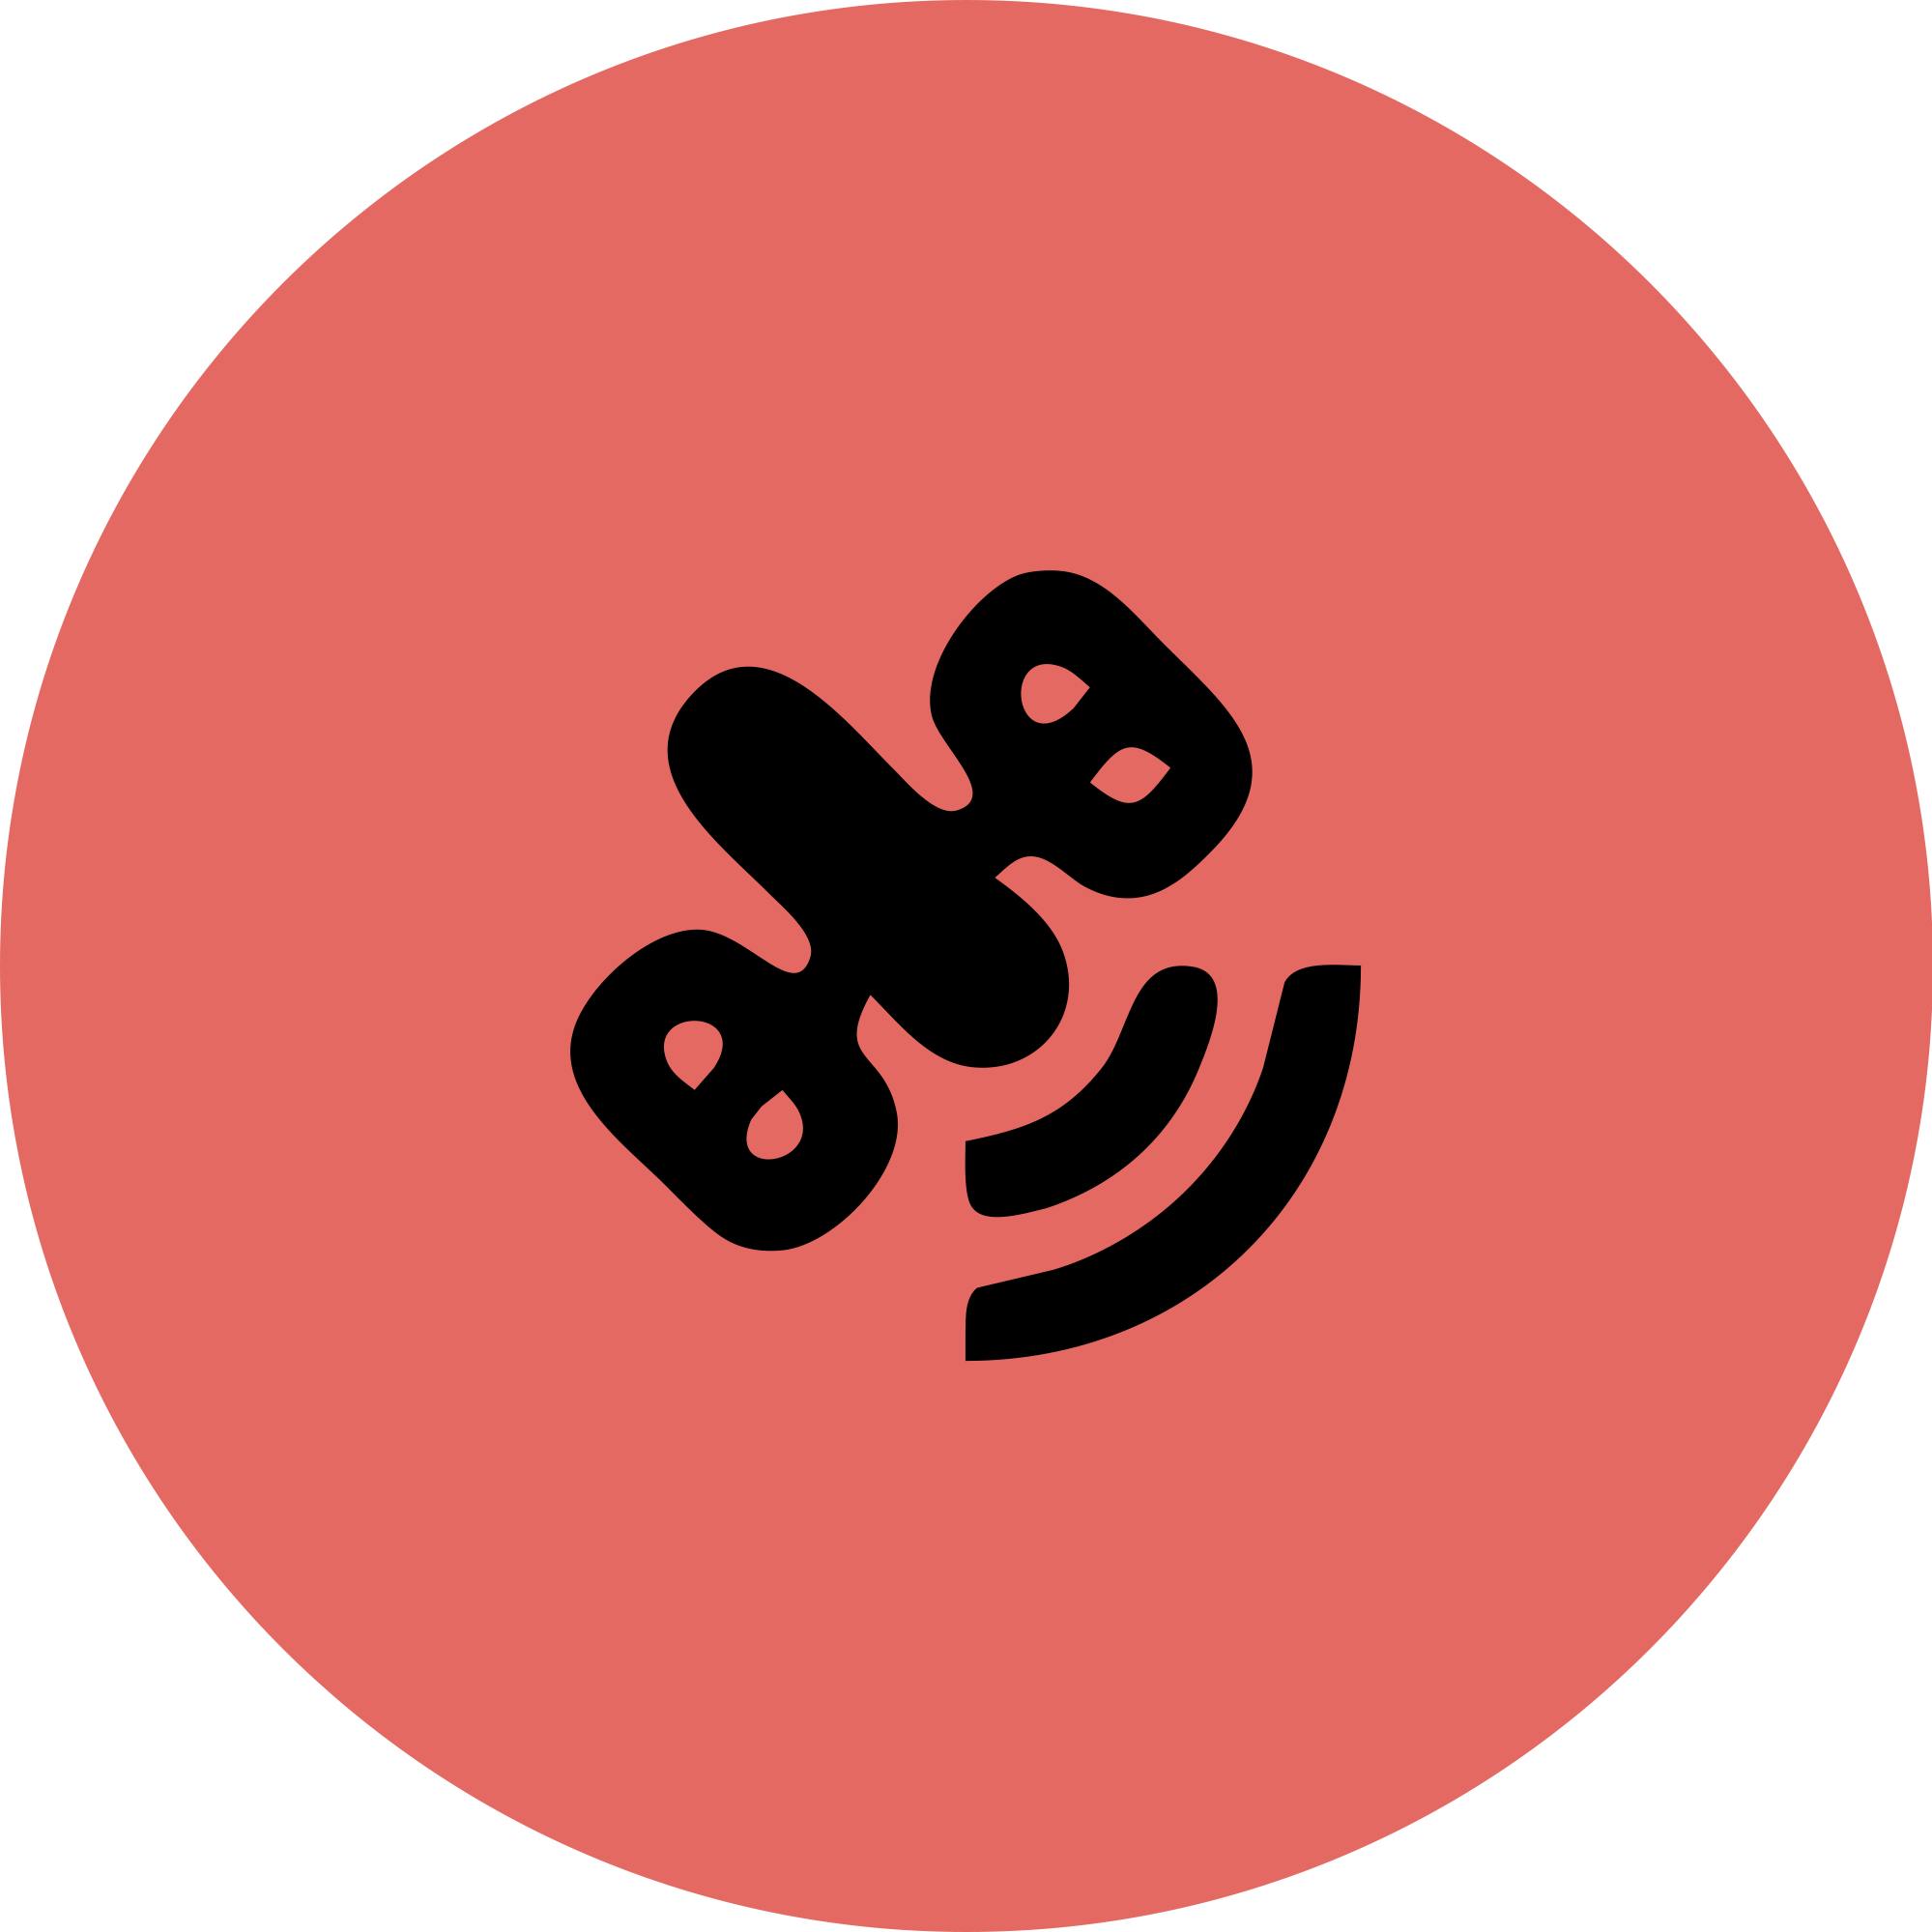 Pixel 9 Satellite Gateway app icon: A black satellite icon on a pinkish-red circular background